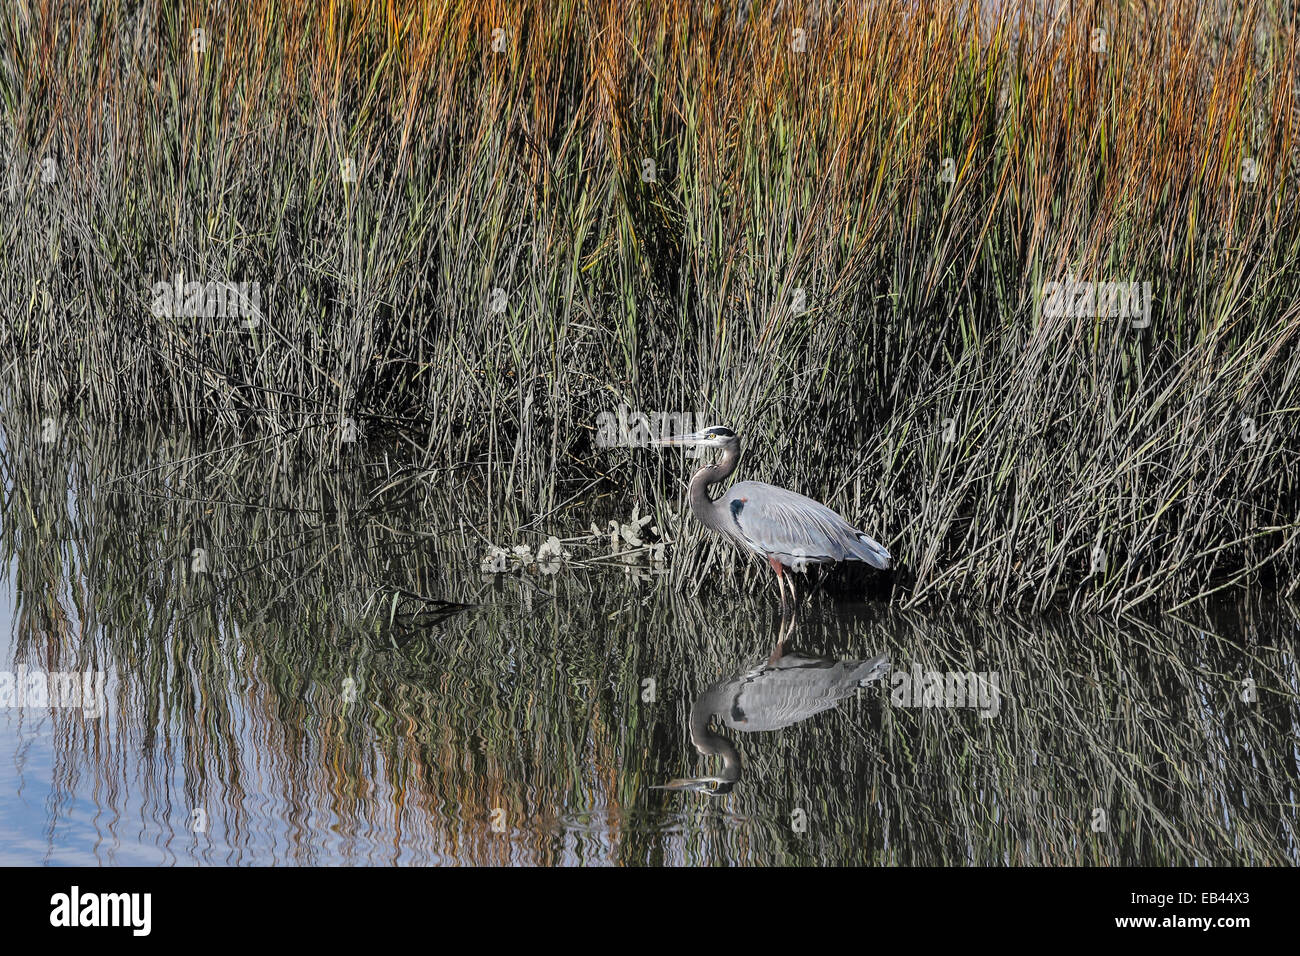 A Great blue heron wades among the spartina grass. Stock Photo